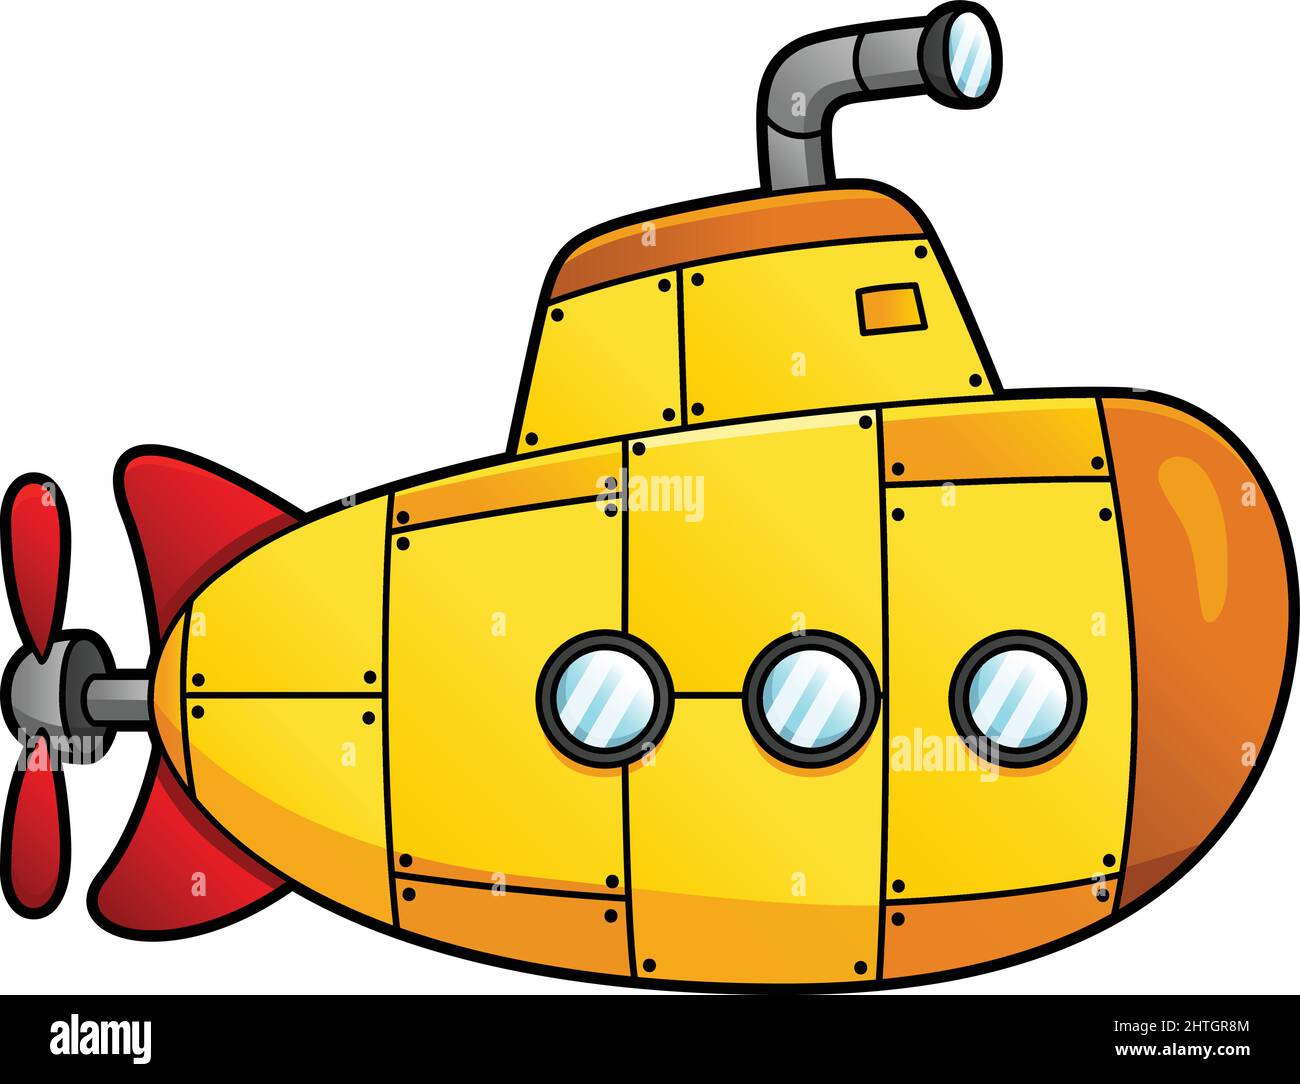 Submarine Cartoon Clipart Colored Illustration Stock Vector